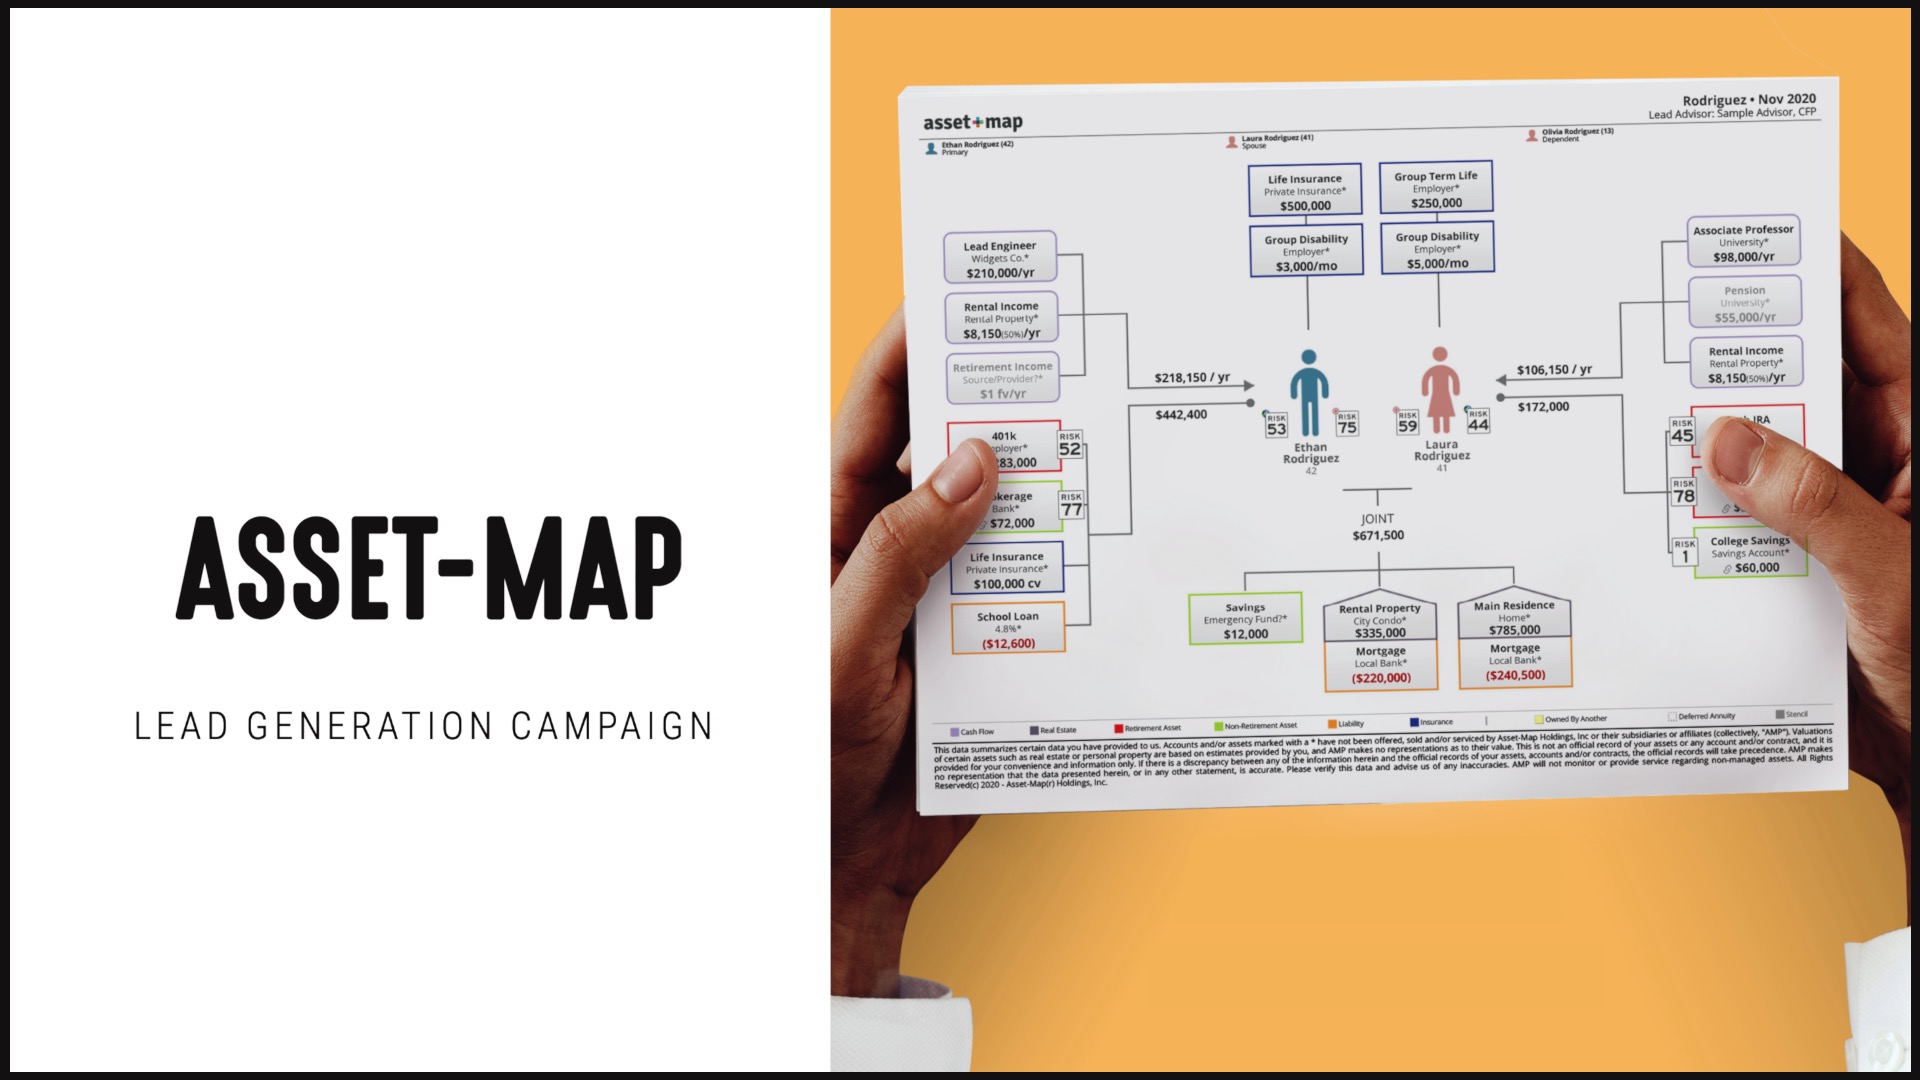 [NEW] Lead Gen Campaign | Asset-Map